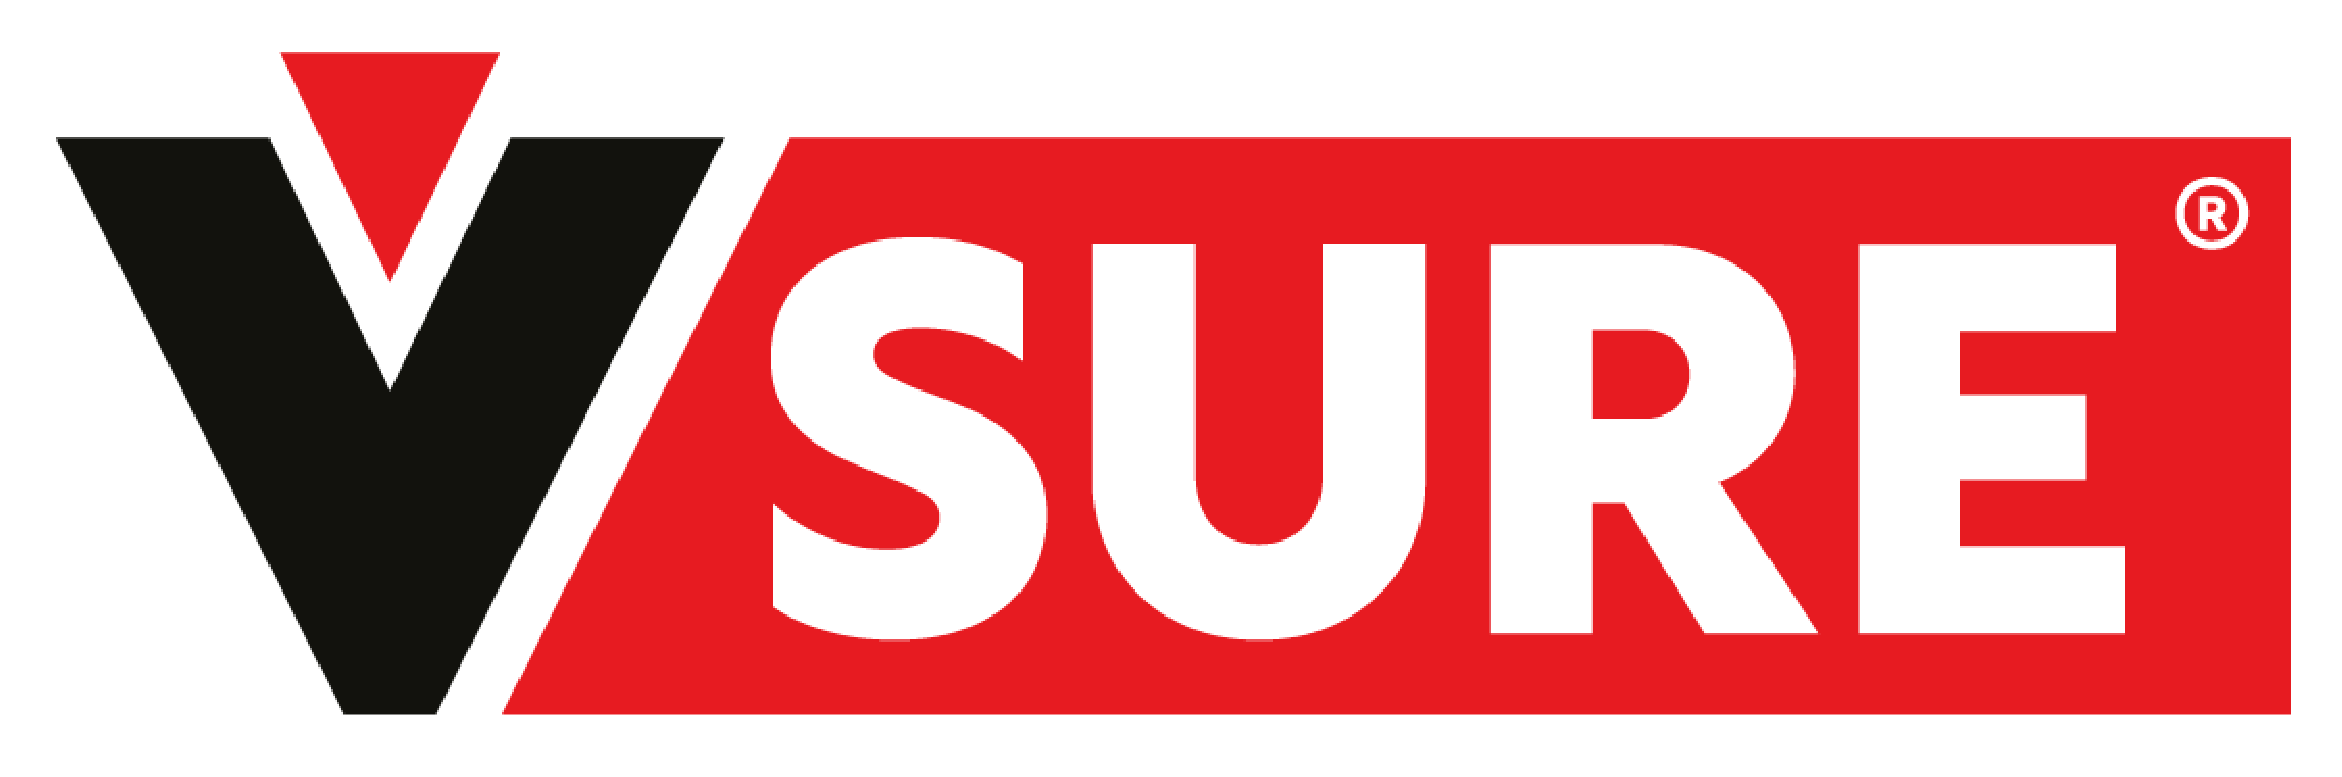 V-Sure logo